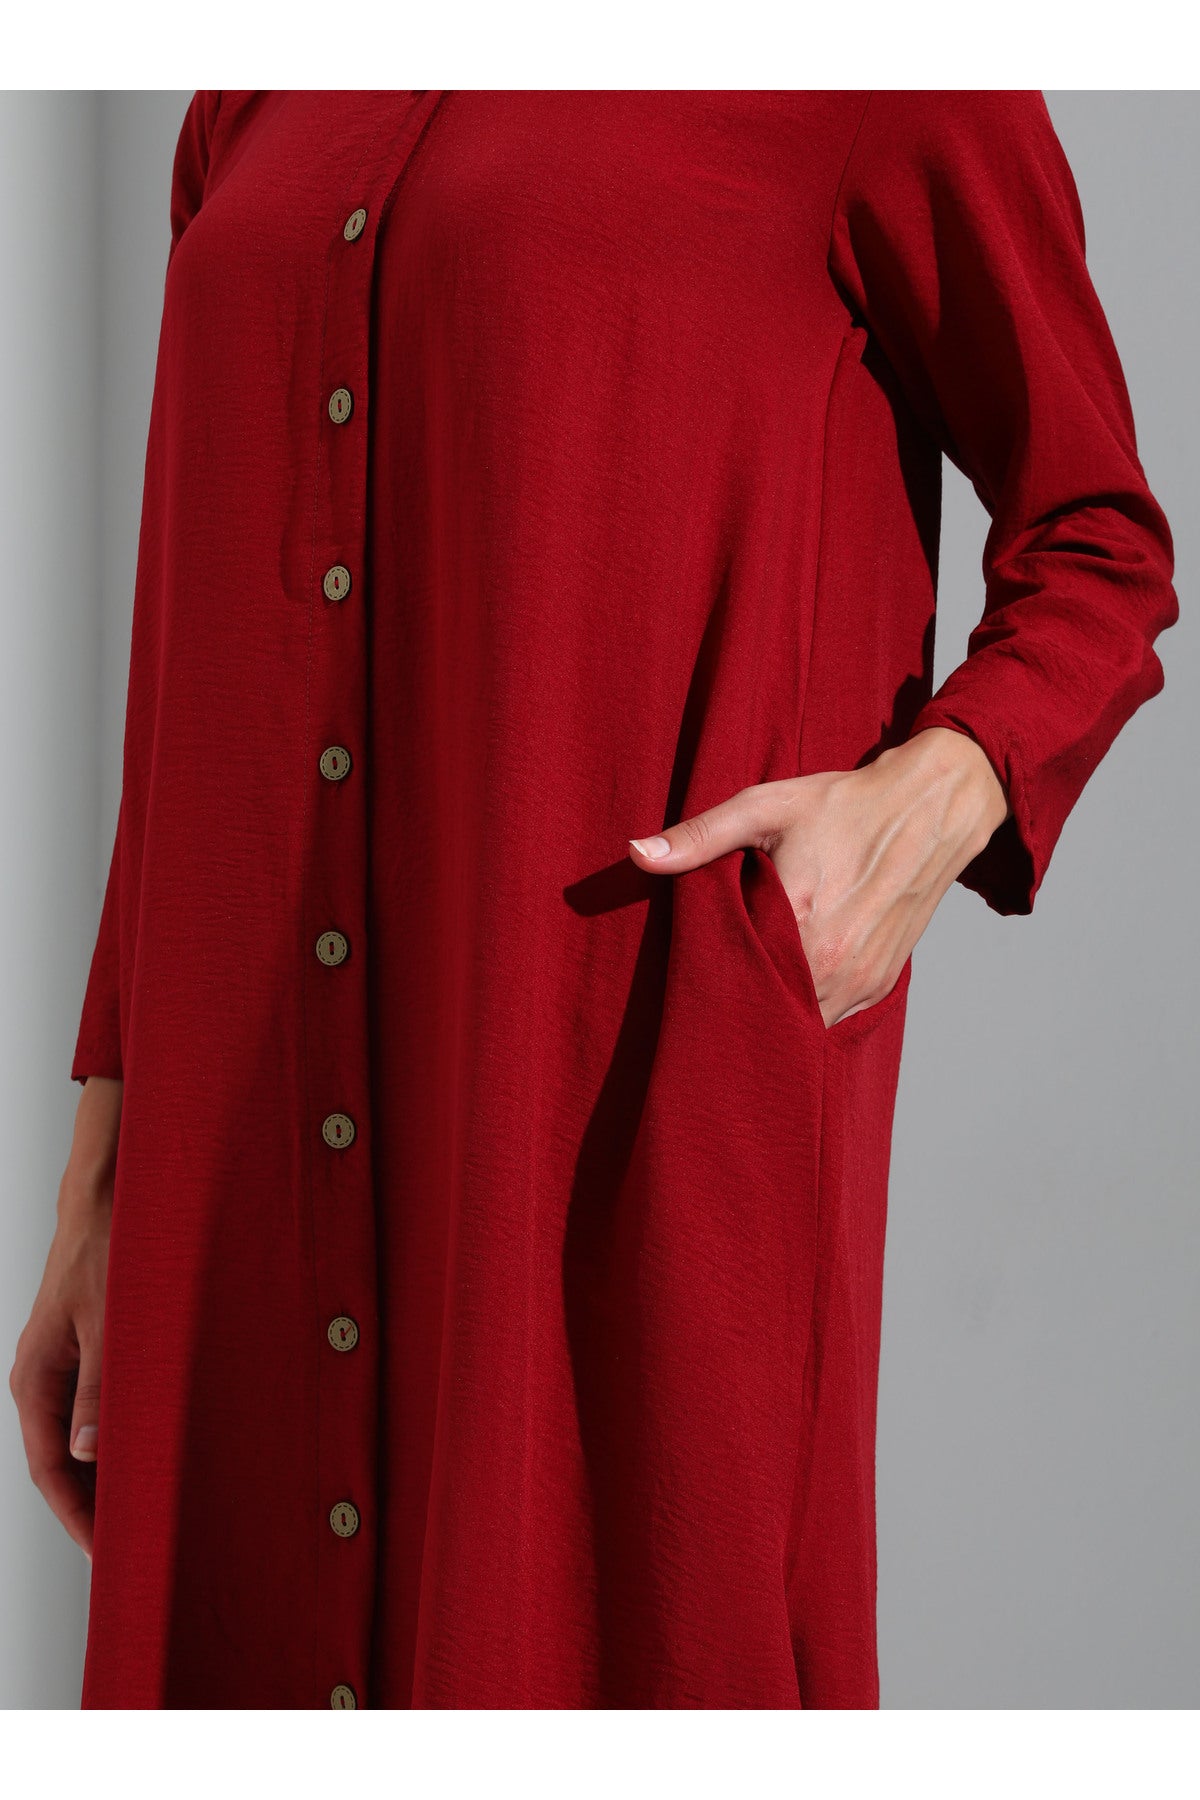 SD Women's Burgundy Long Tunic with Button Detail Shirt TR695(yz82)